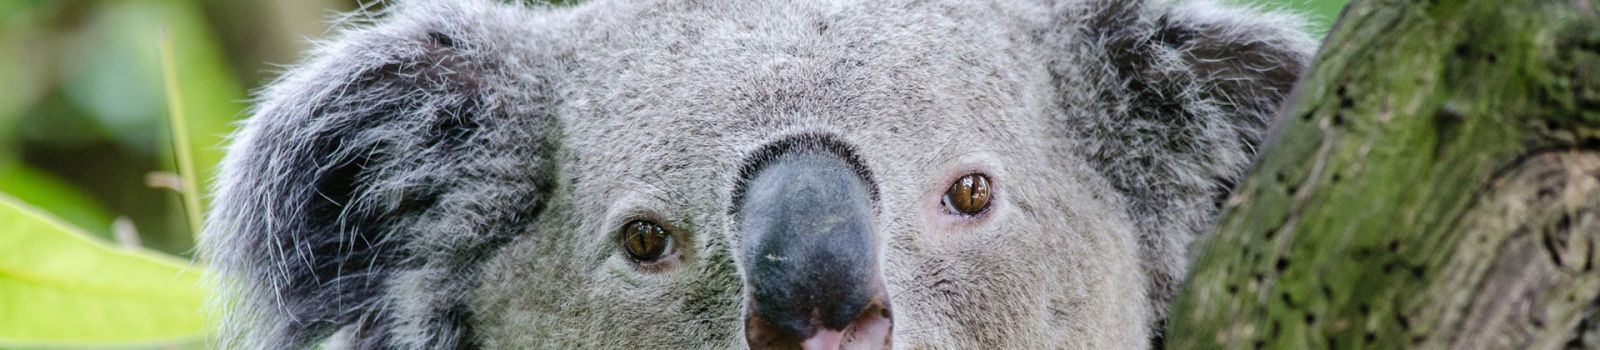 Close up image of a koala hugging a tree banner image